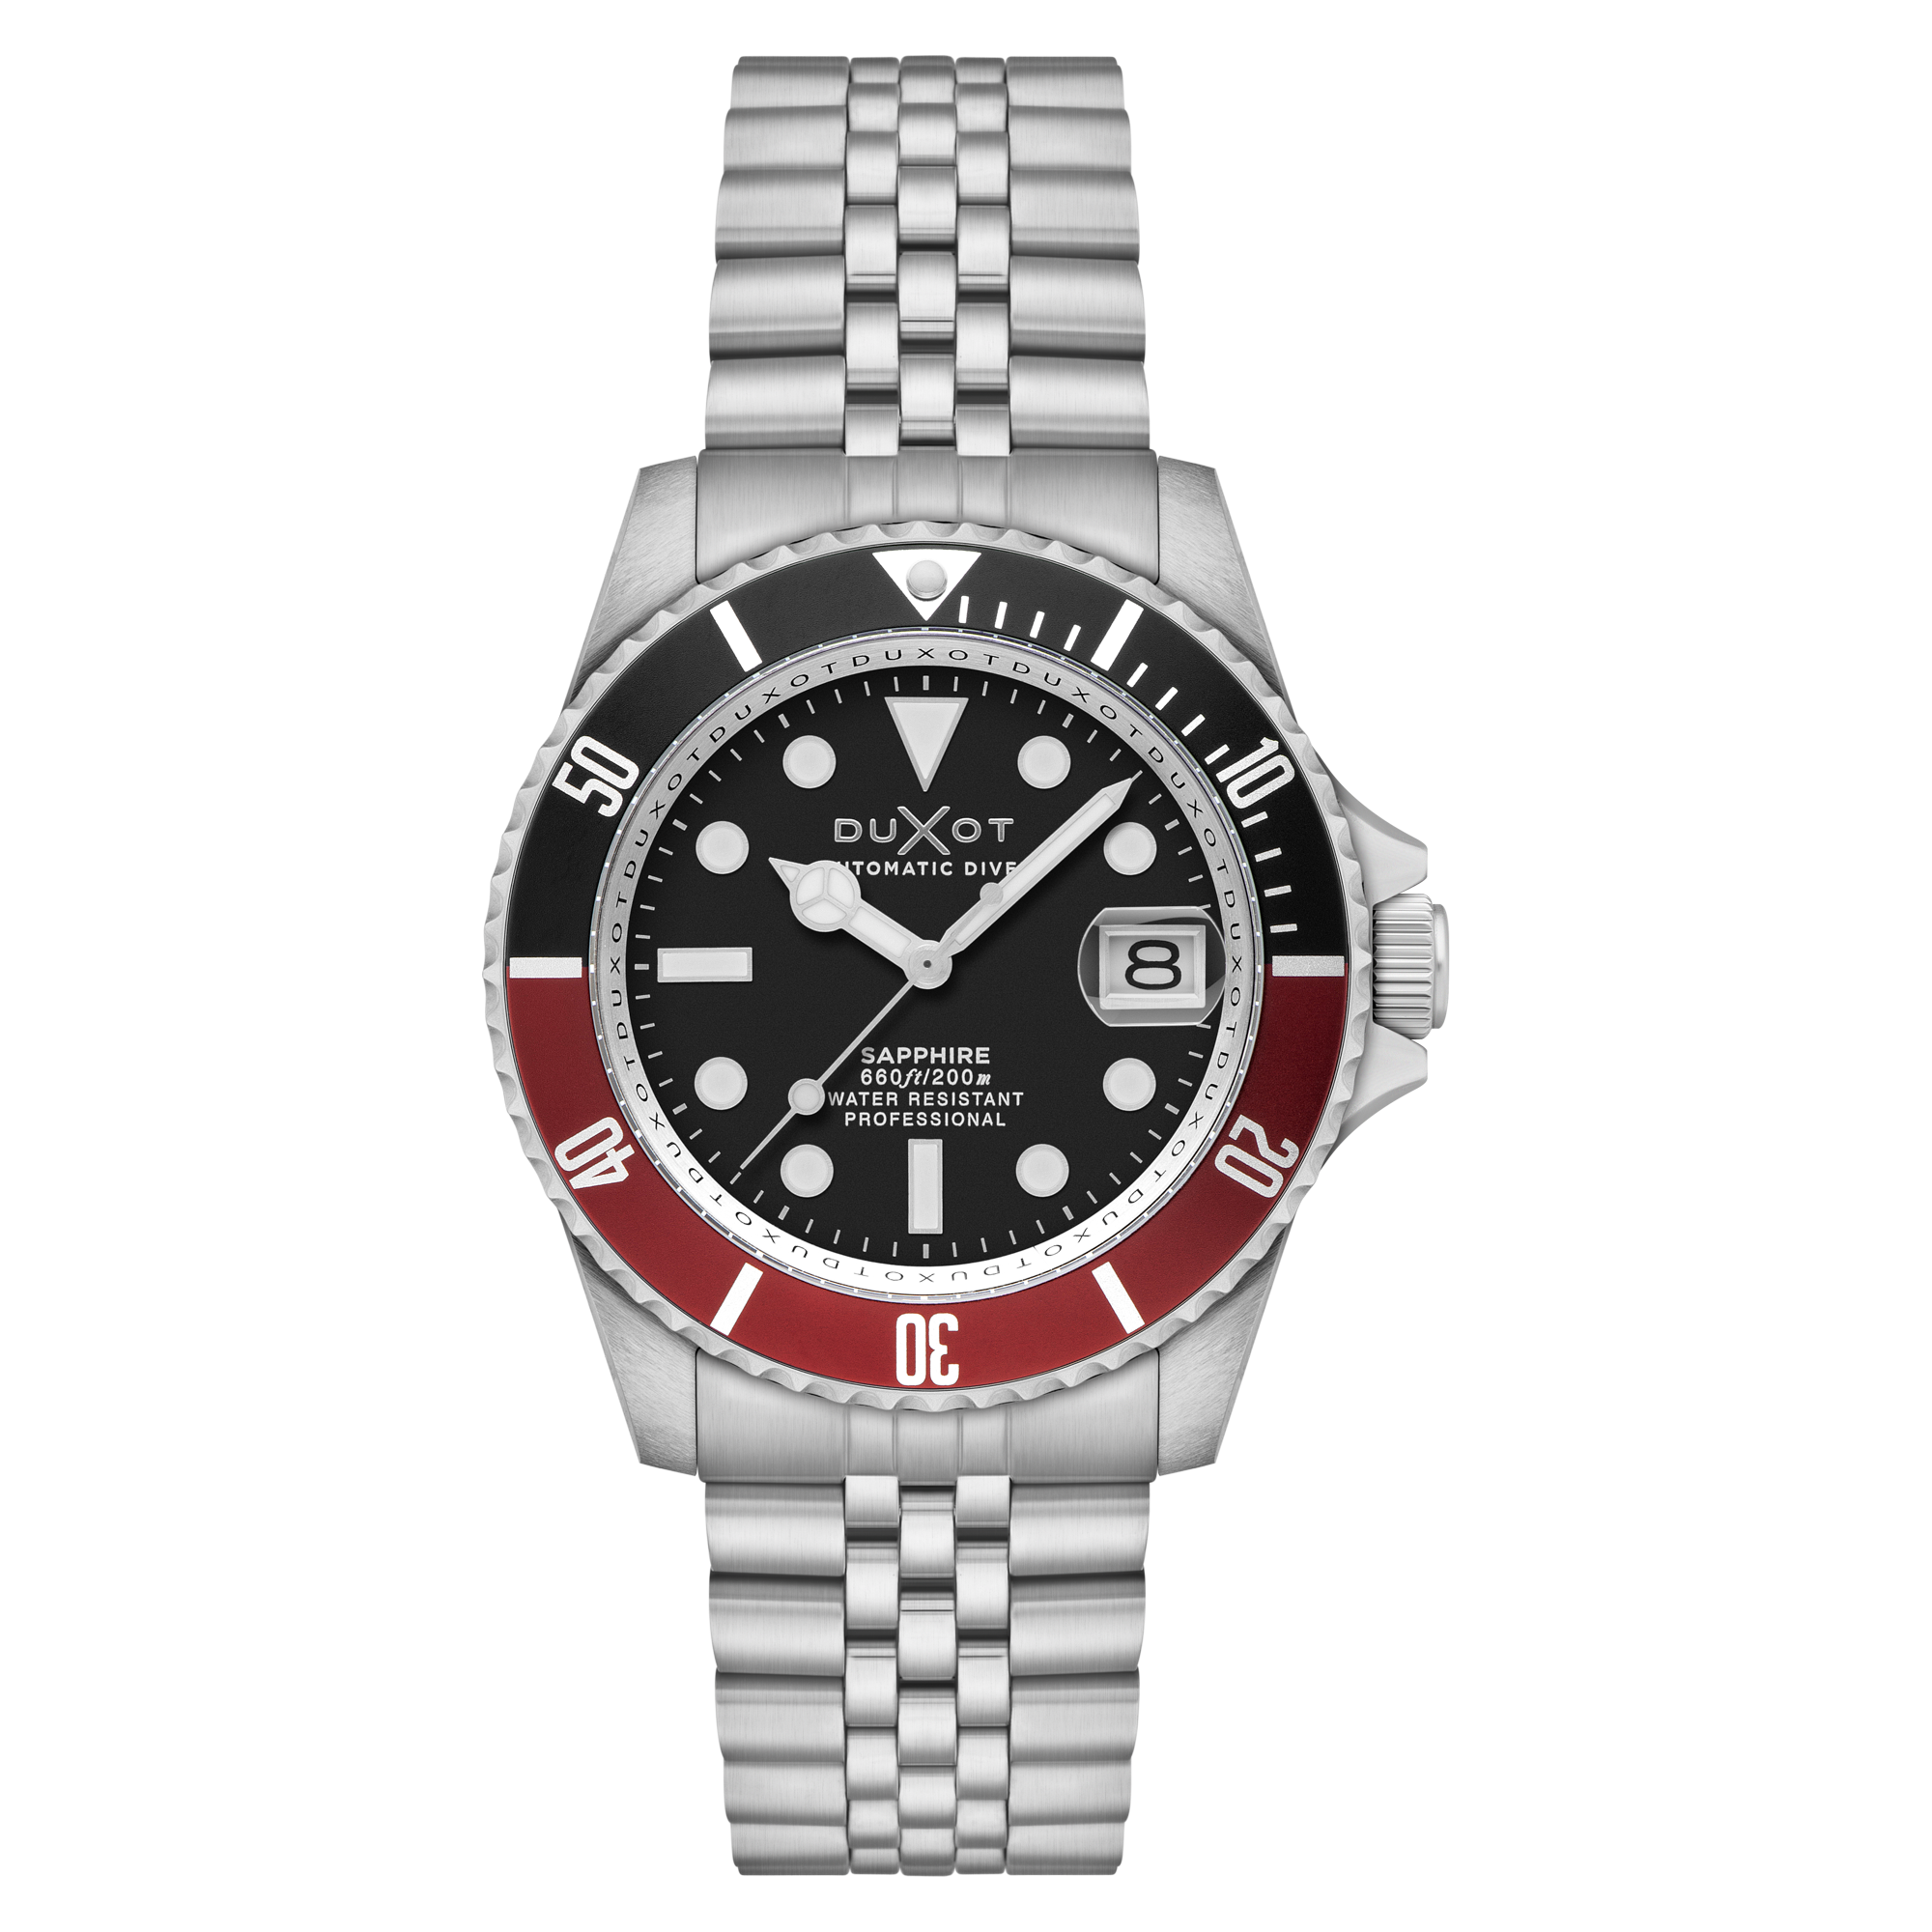 Duxot Atlantica Diver Automatic Jade Black Men's Watch DX-2057-88